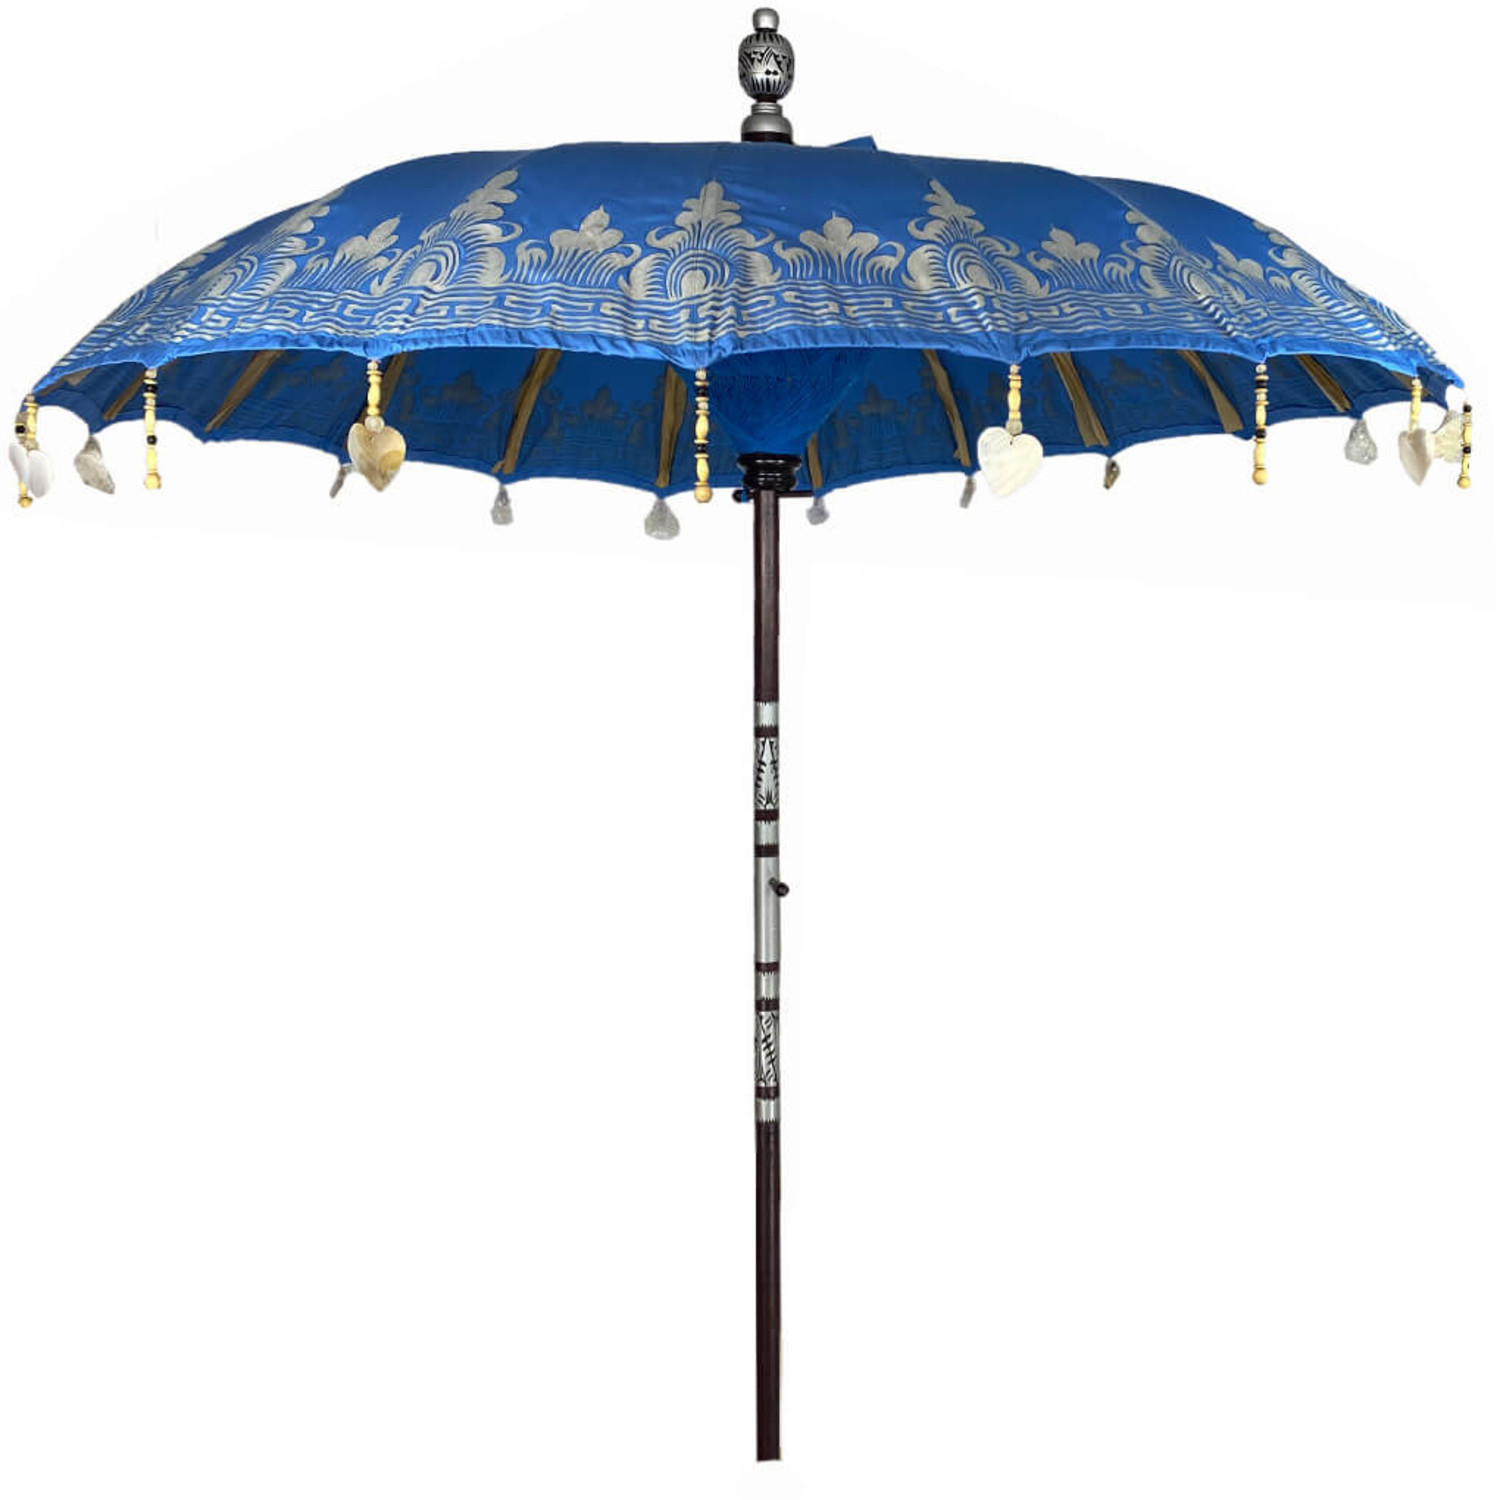 diefstal Razernij Opblazen Oosterse parasol blauw uit Bali - Merel in Wonderland